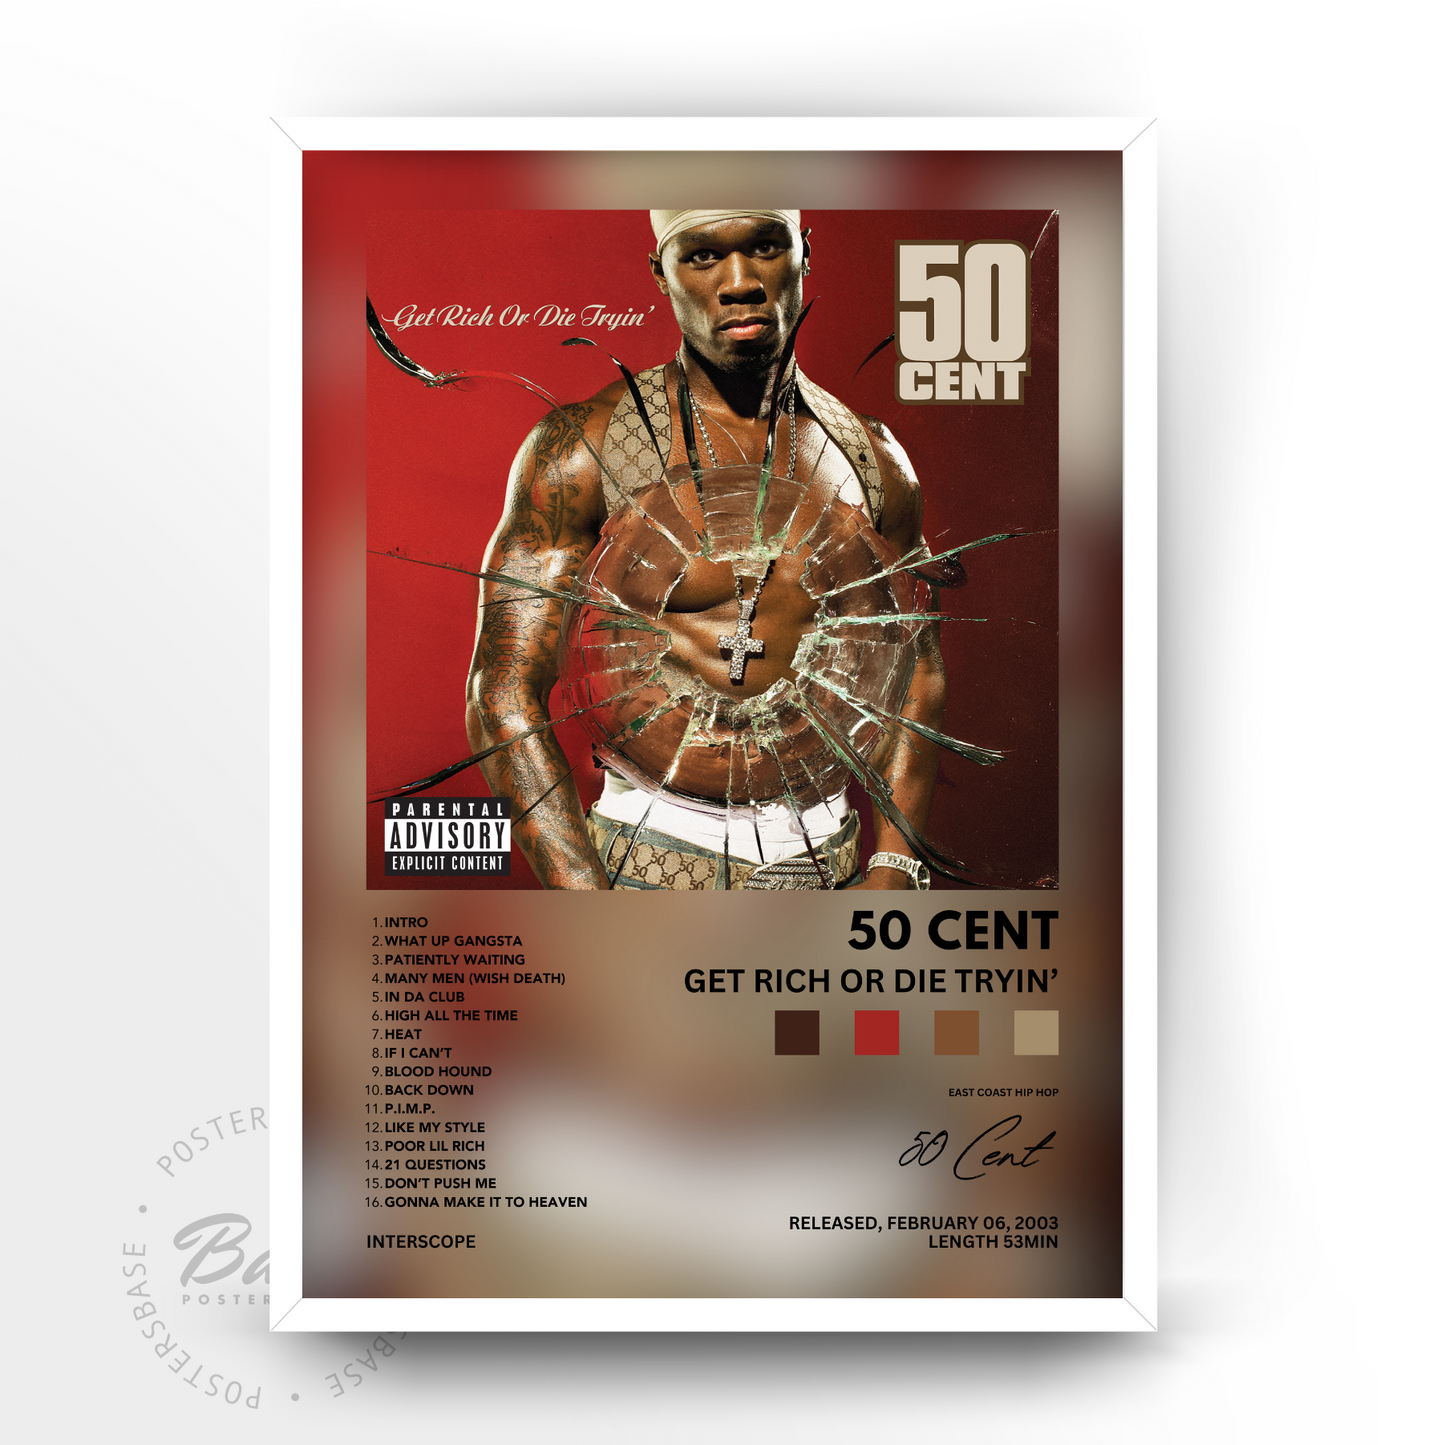 50 Cent 'Get Rich or die tryin'